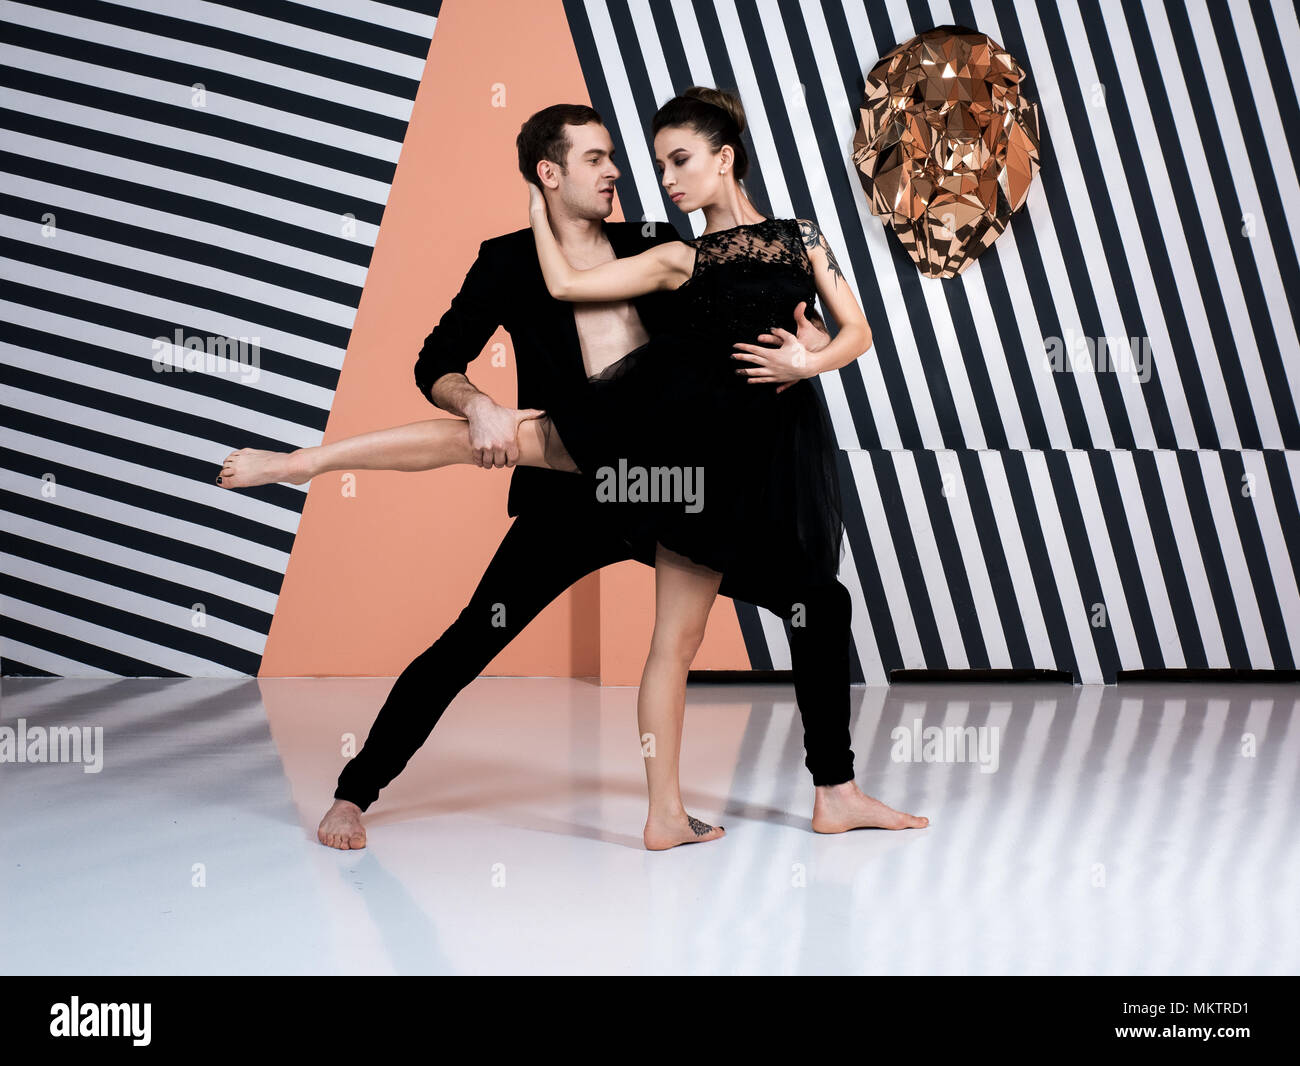 Modern ballet dancer couple in black jacket black trousers, black dress performing art jump element with zebra background Stock Photo